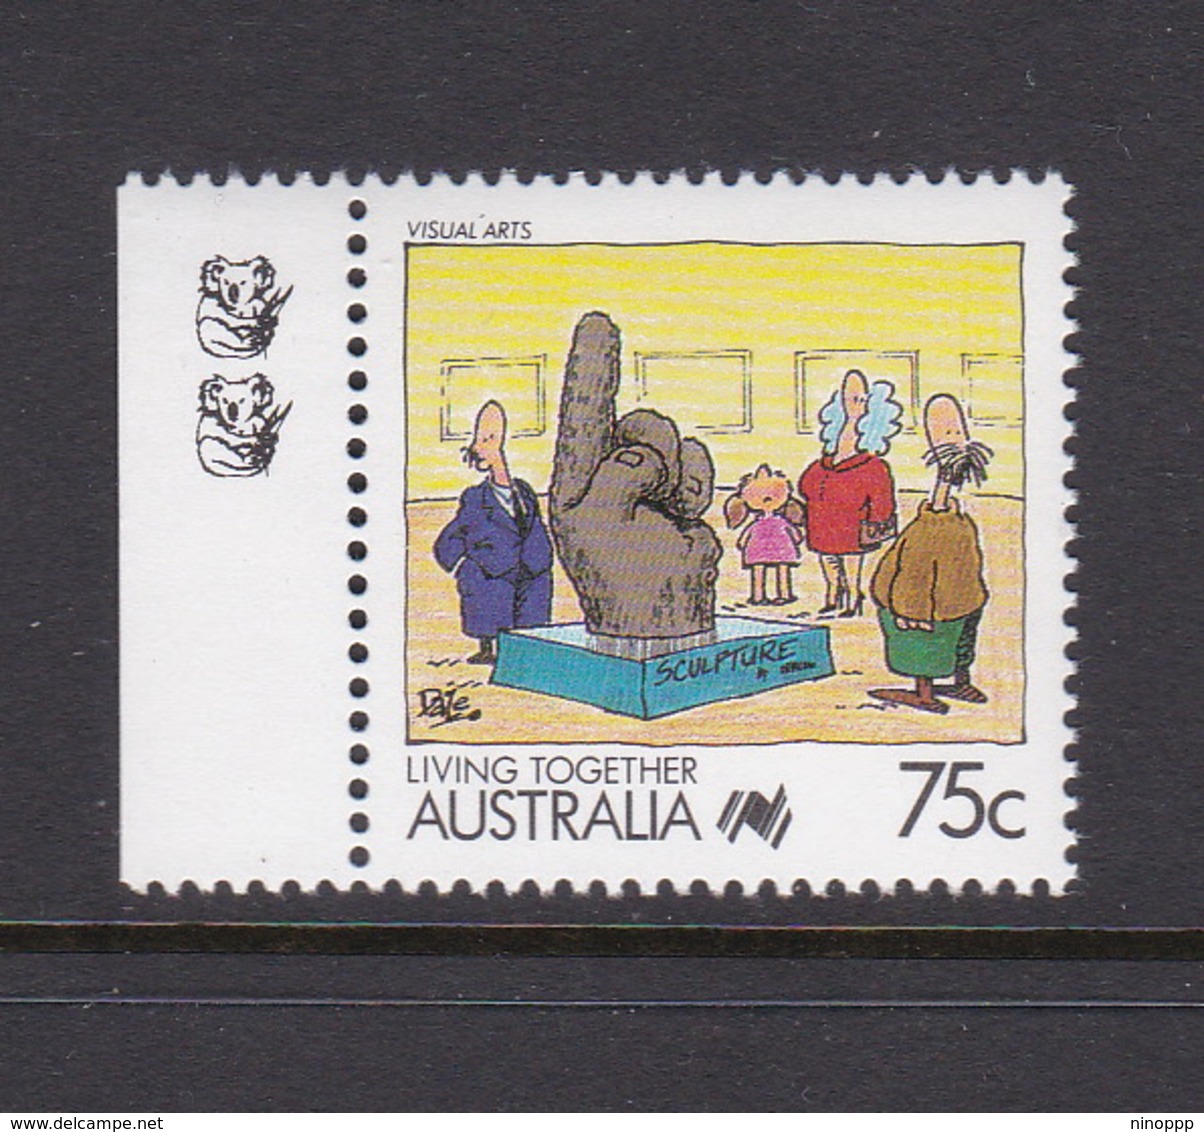 Australia ASC 1142a 1988 Living Together 75c Visual Arts 2 Koalas,mint Never Hinged - Proofs & Reprints